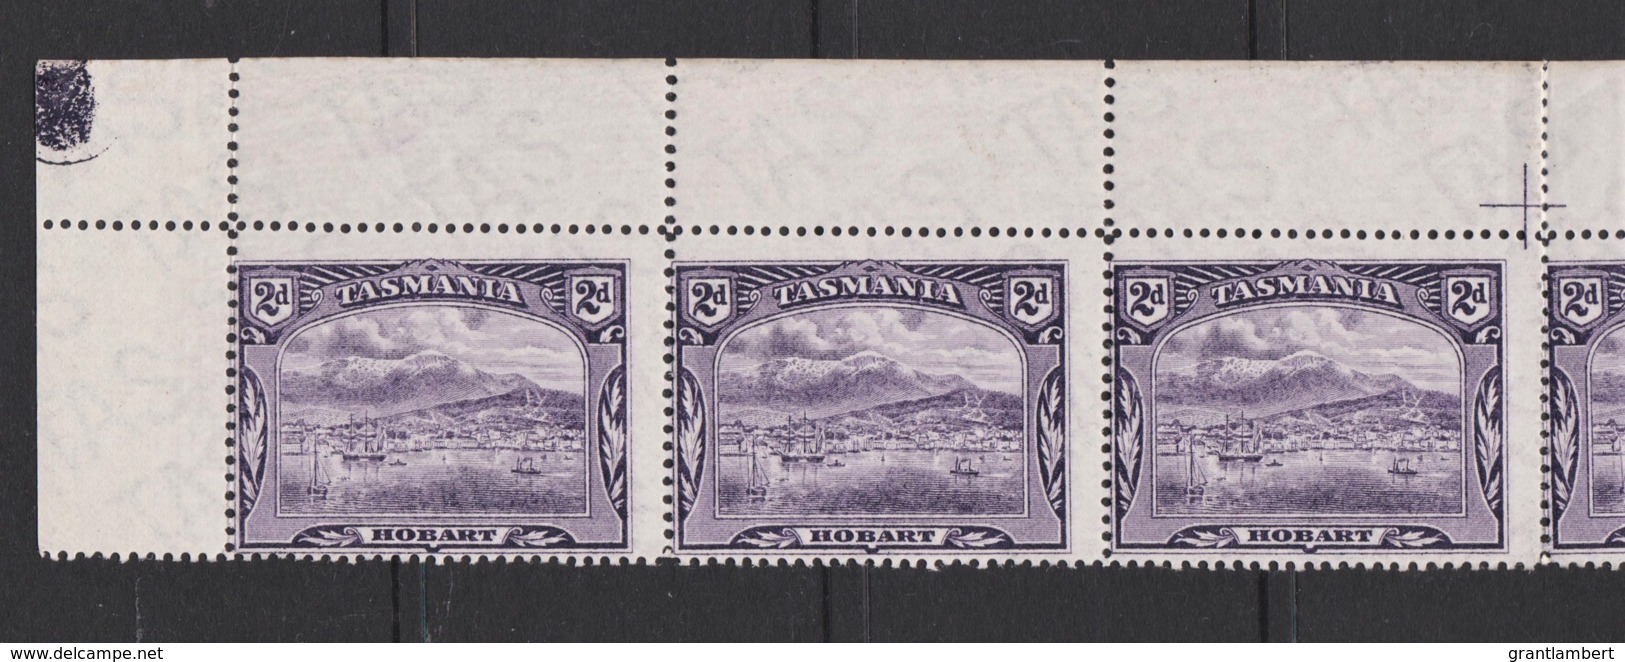 Tasmania 1899 Pictorial - Hobart 2d Deep Violet Strip Of 6 MNH  SG 231 - Nuevos